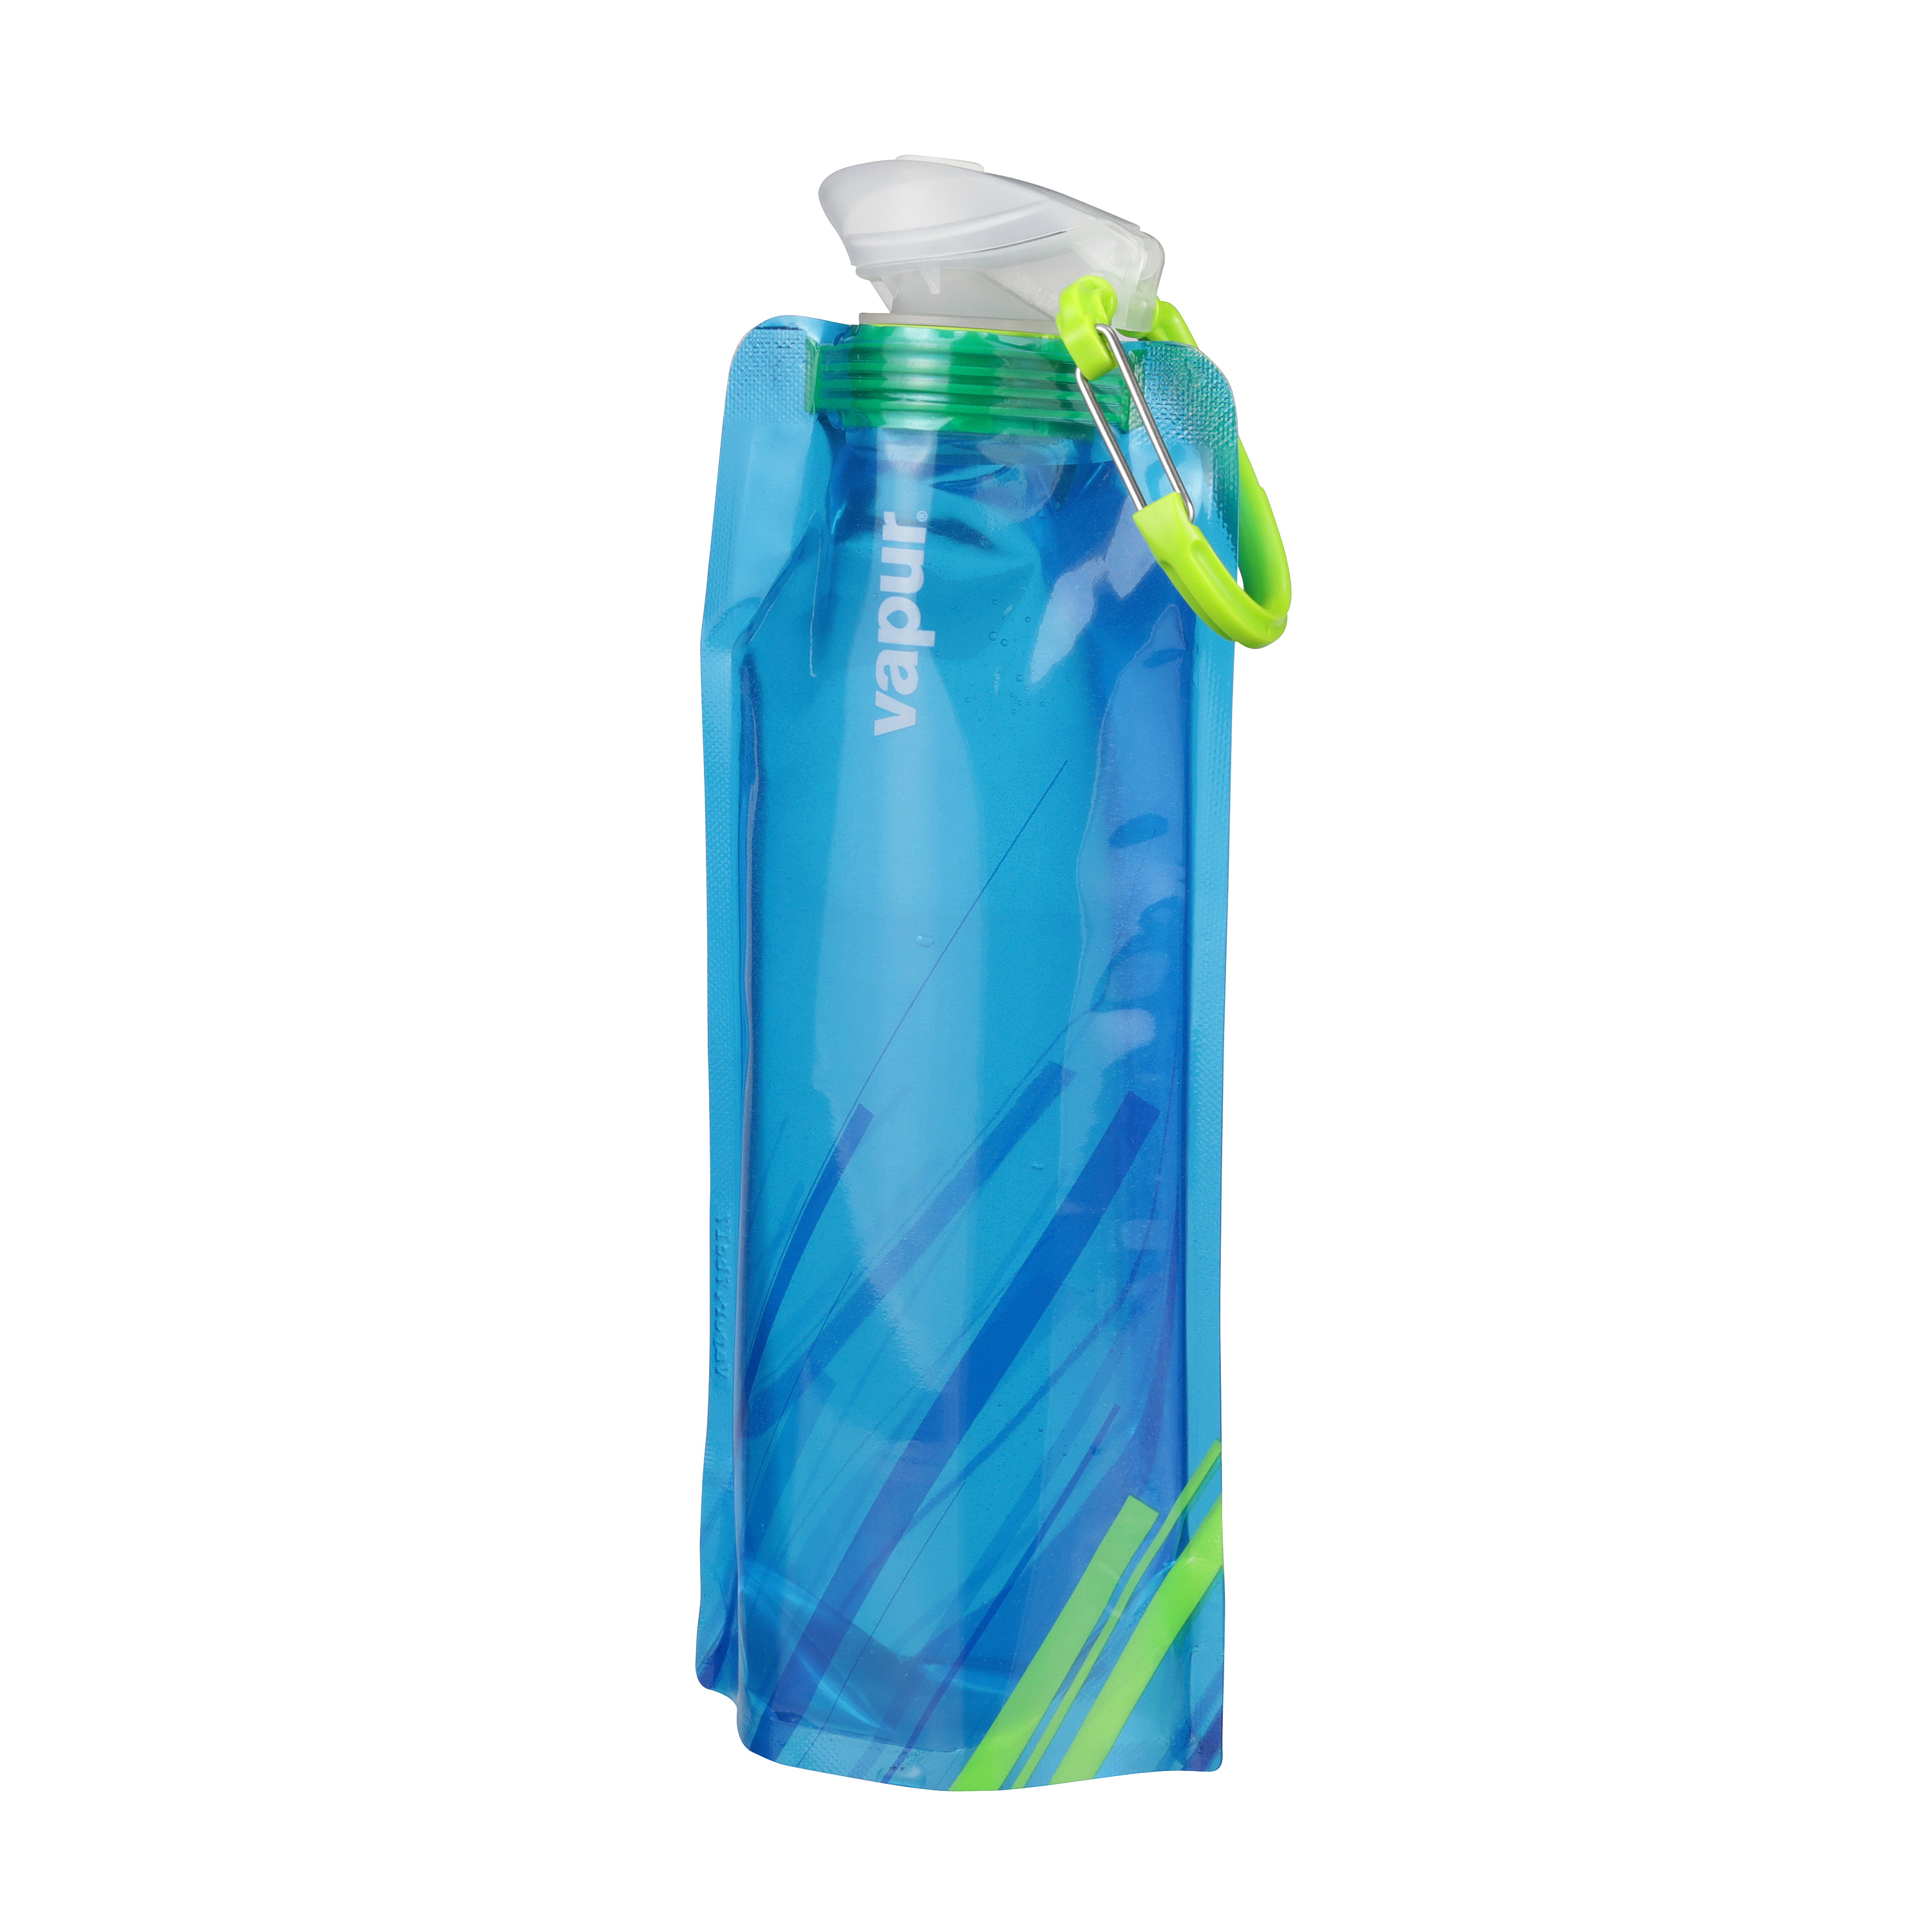 The Best Foldable Water Bottle: Vapur Element Review 2020